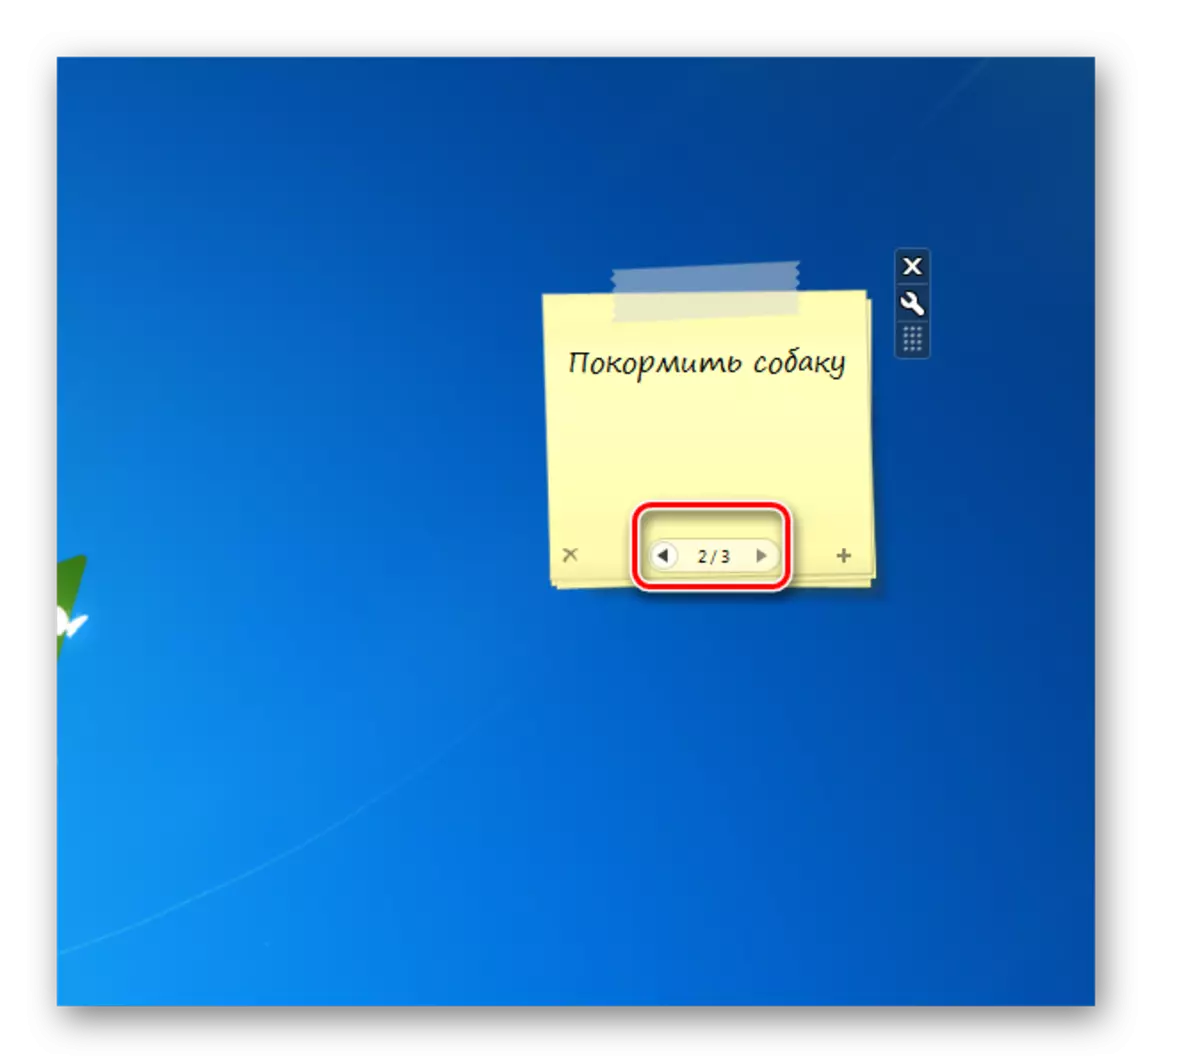 Elemen Navigasi Antara Halaman dalam Bangunan Gadget Sticker Chameleon Notescolour pada Desktop di Windows 7